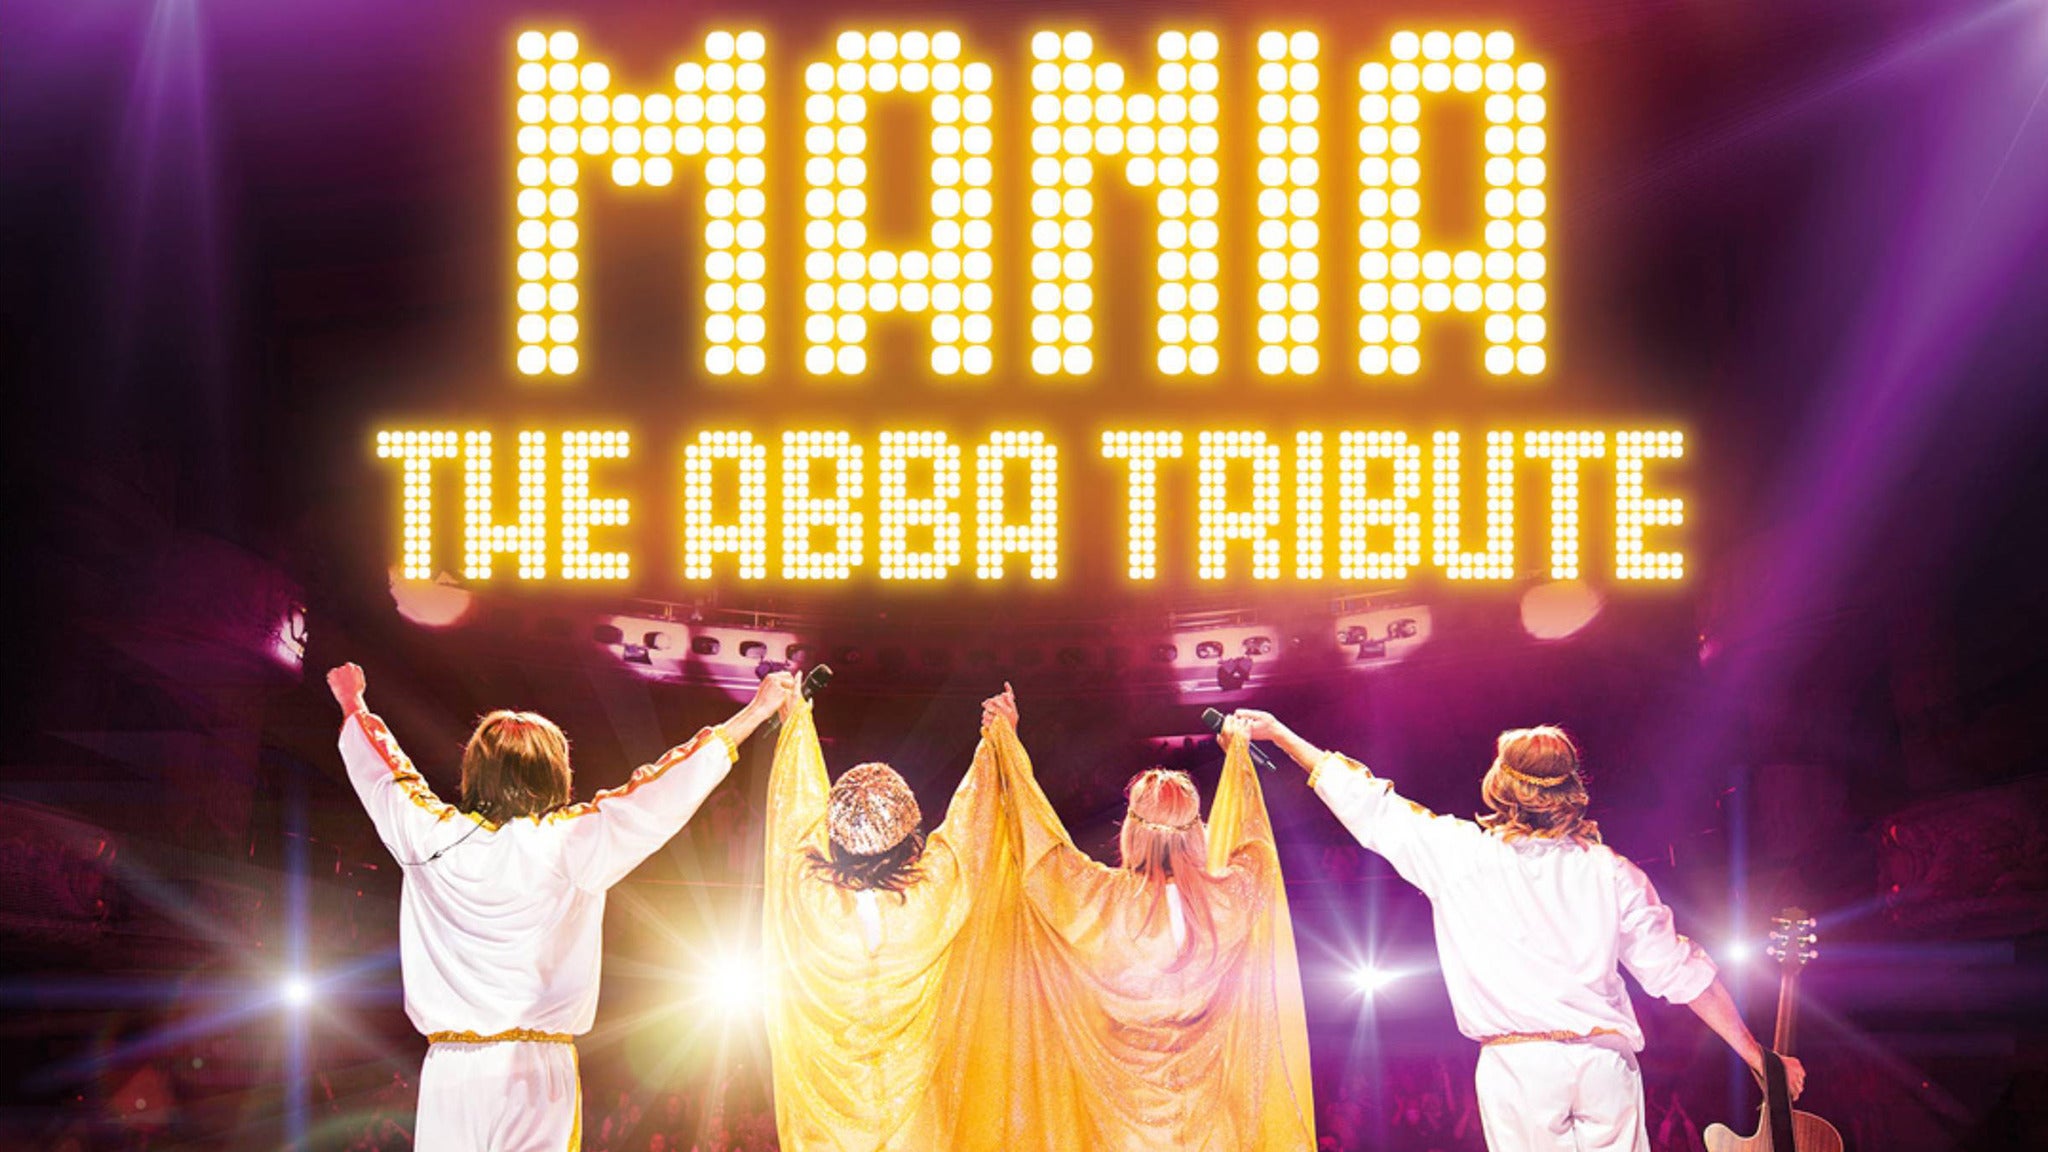 ABBA Mania at Budweiser Events Center